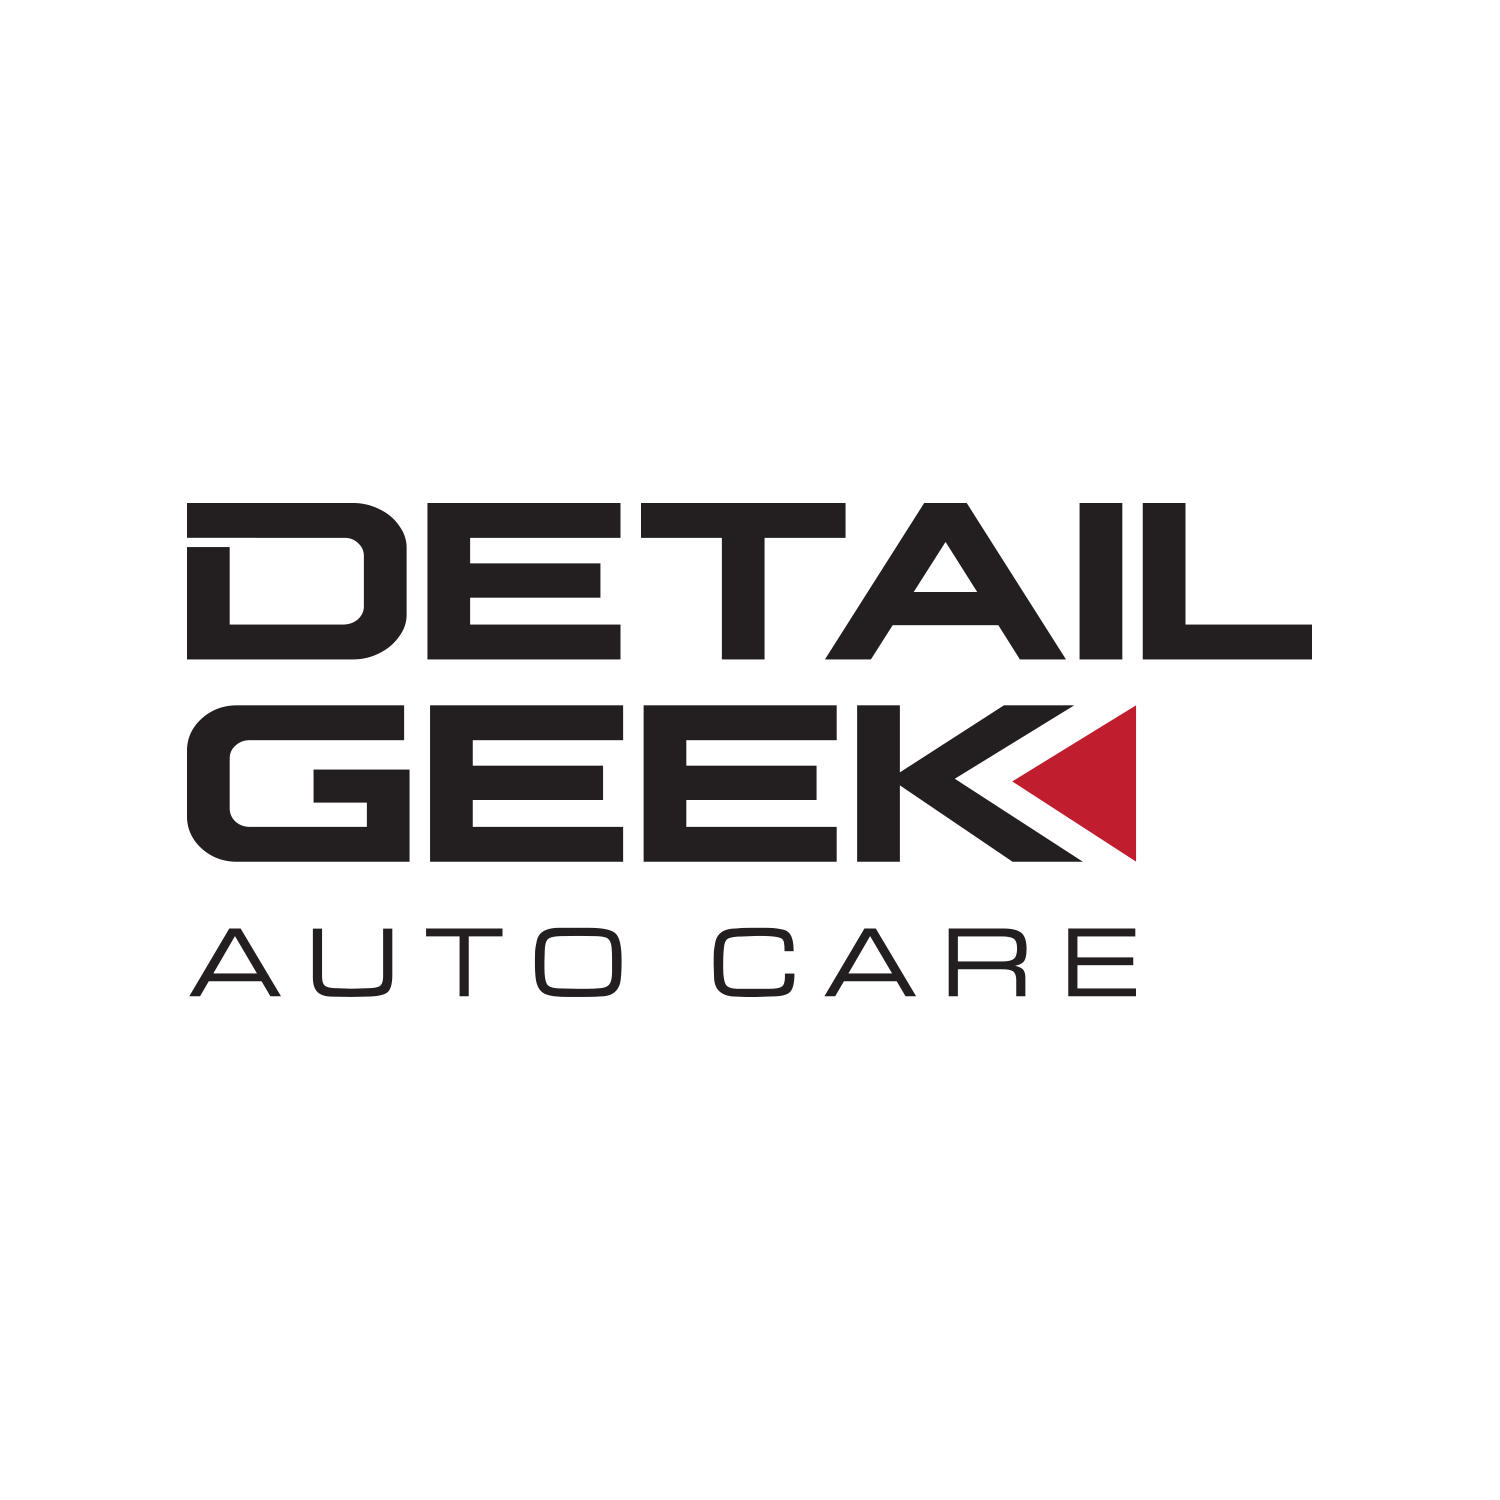 Detail Geek - Medium Green Drill Brush Set - Detail Geek Auto Care Inc.